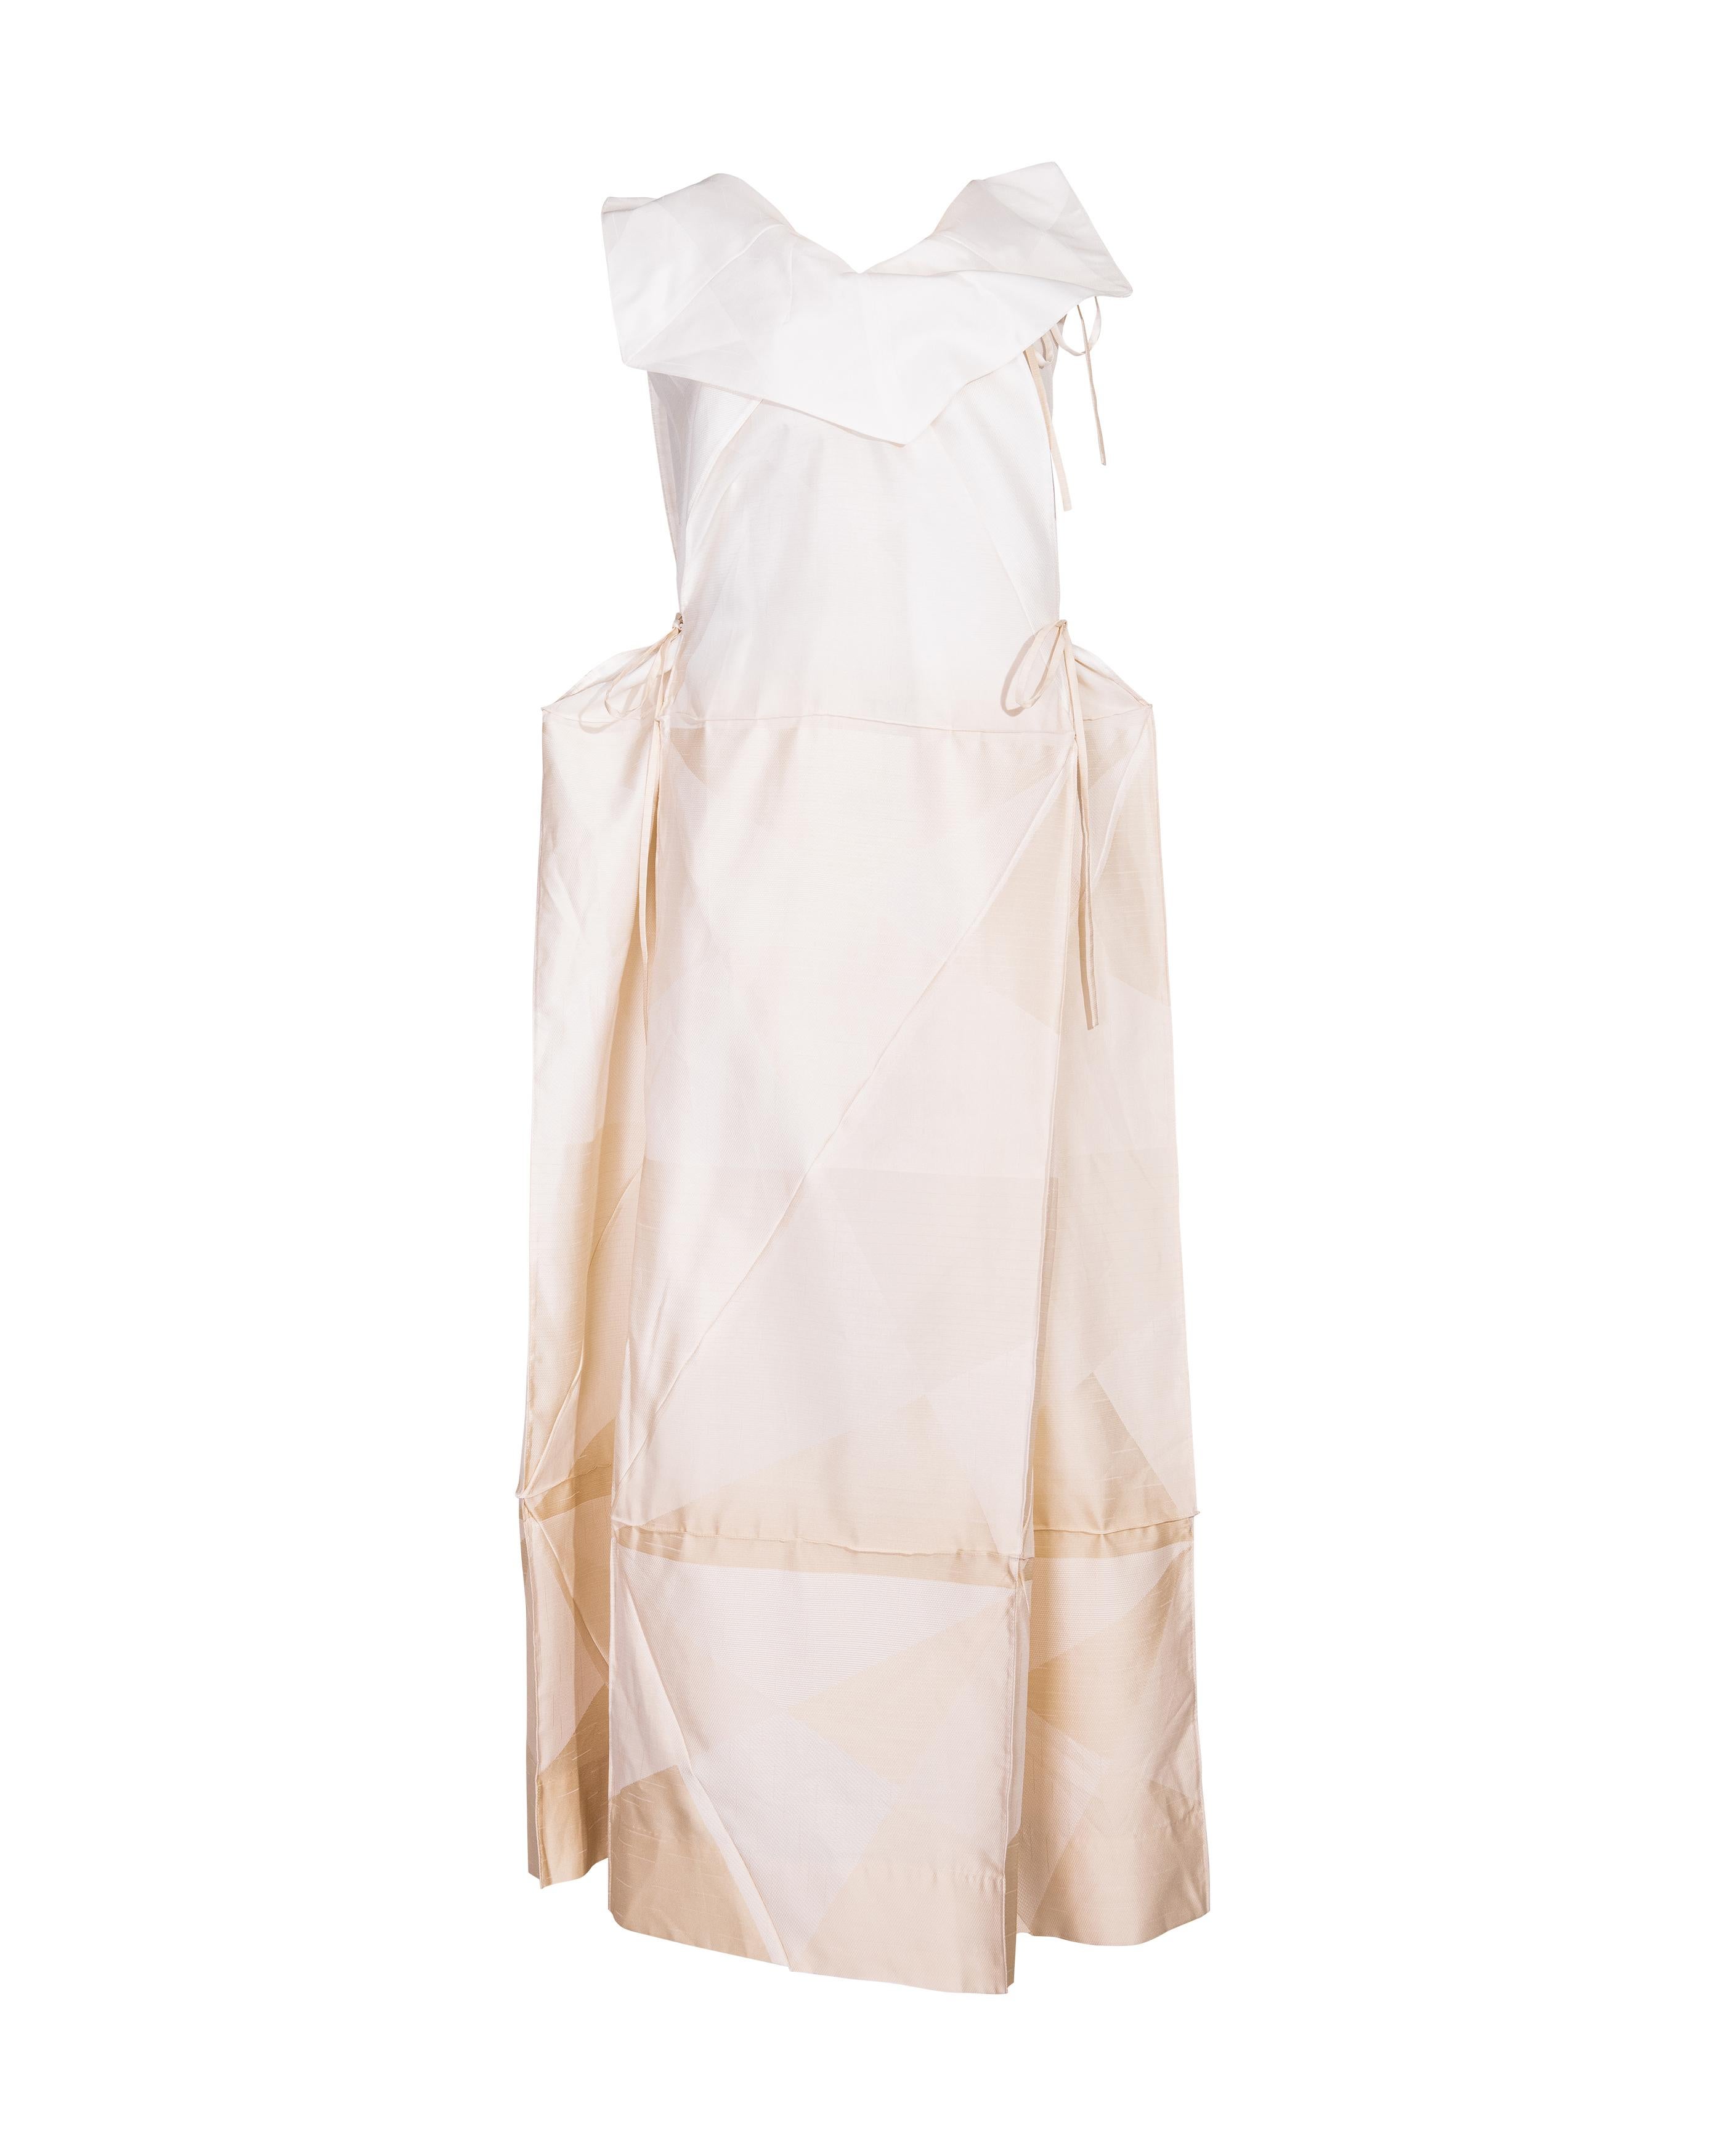 A/W 2008 Issey Miyake White and Cream Geometric Sleeveless Gown 1